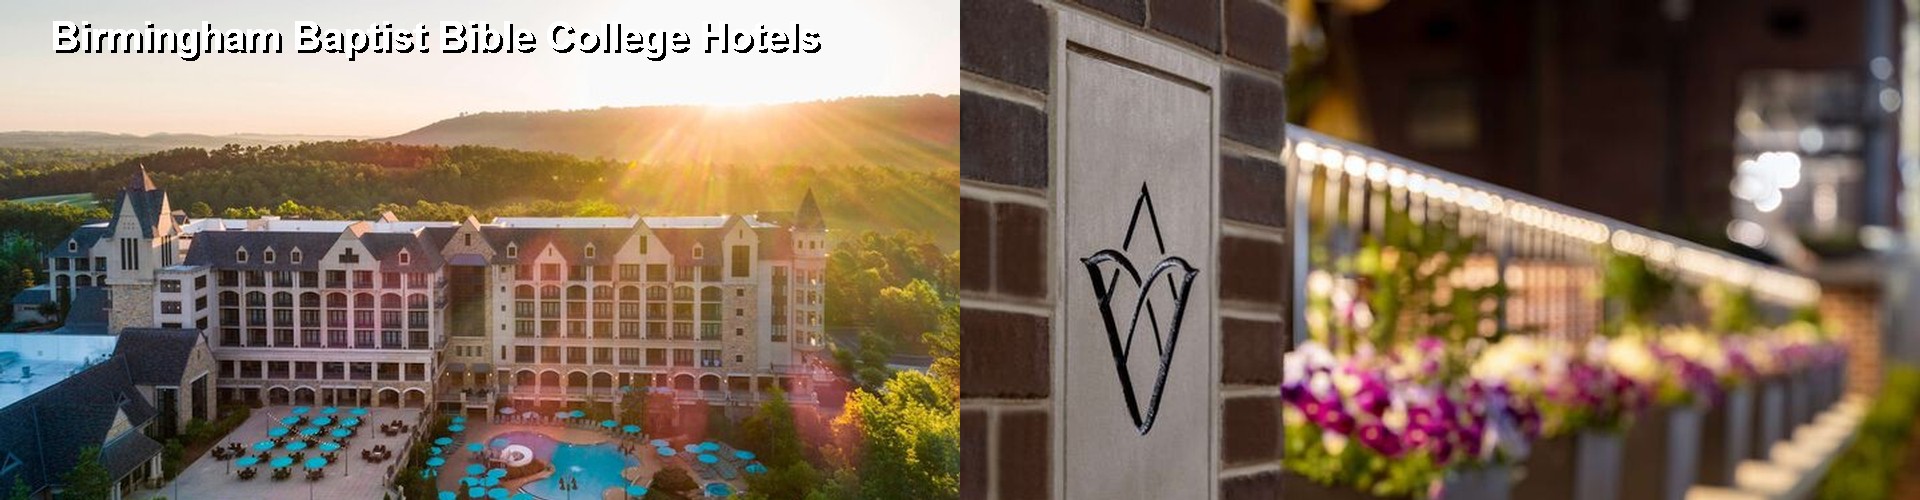 4 Best Hotels near Birmingham Baptist Bible College